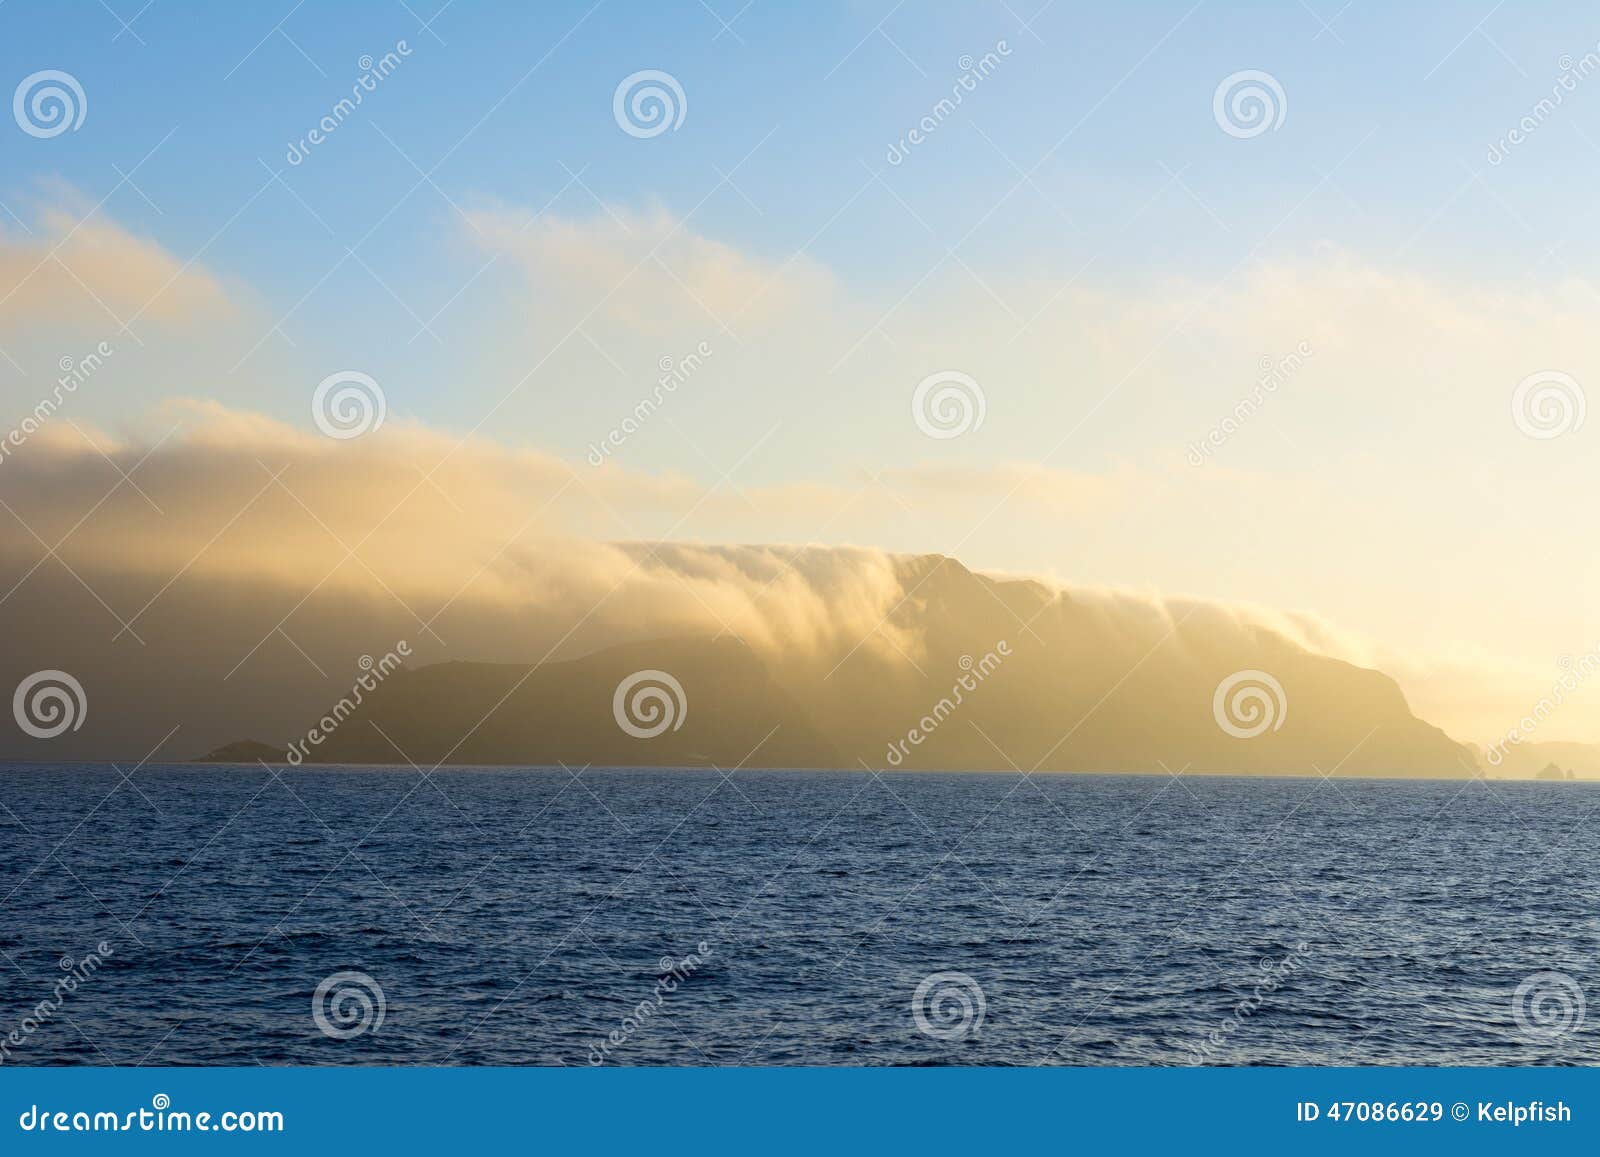 island engulfed in clouds